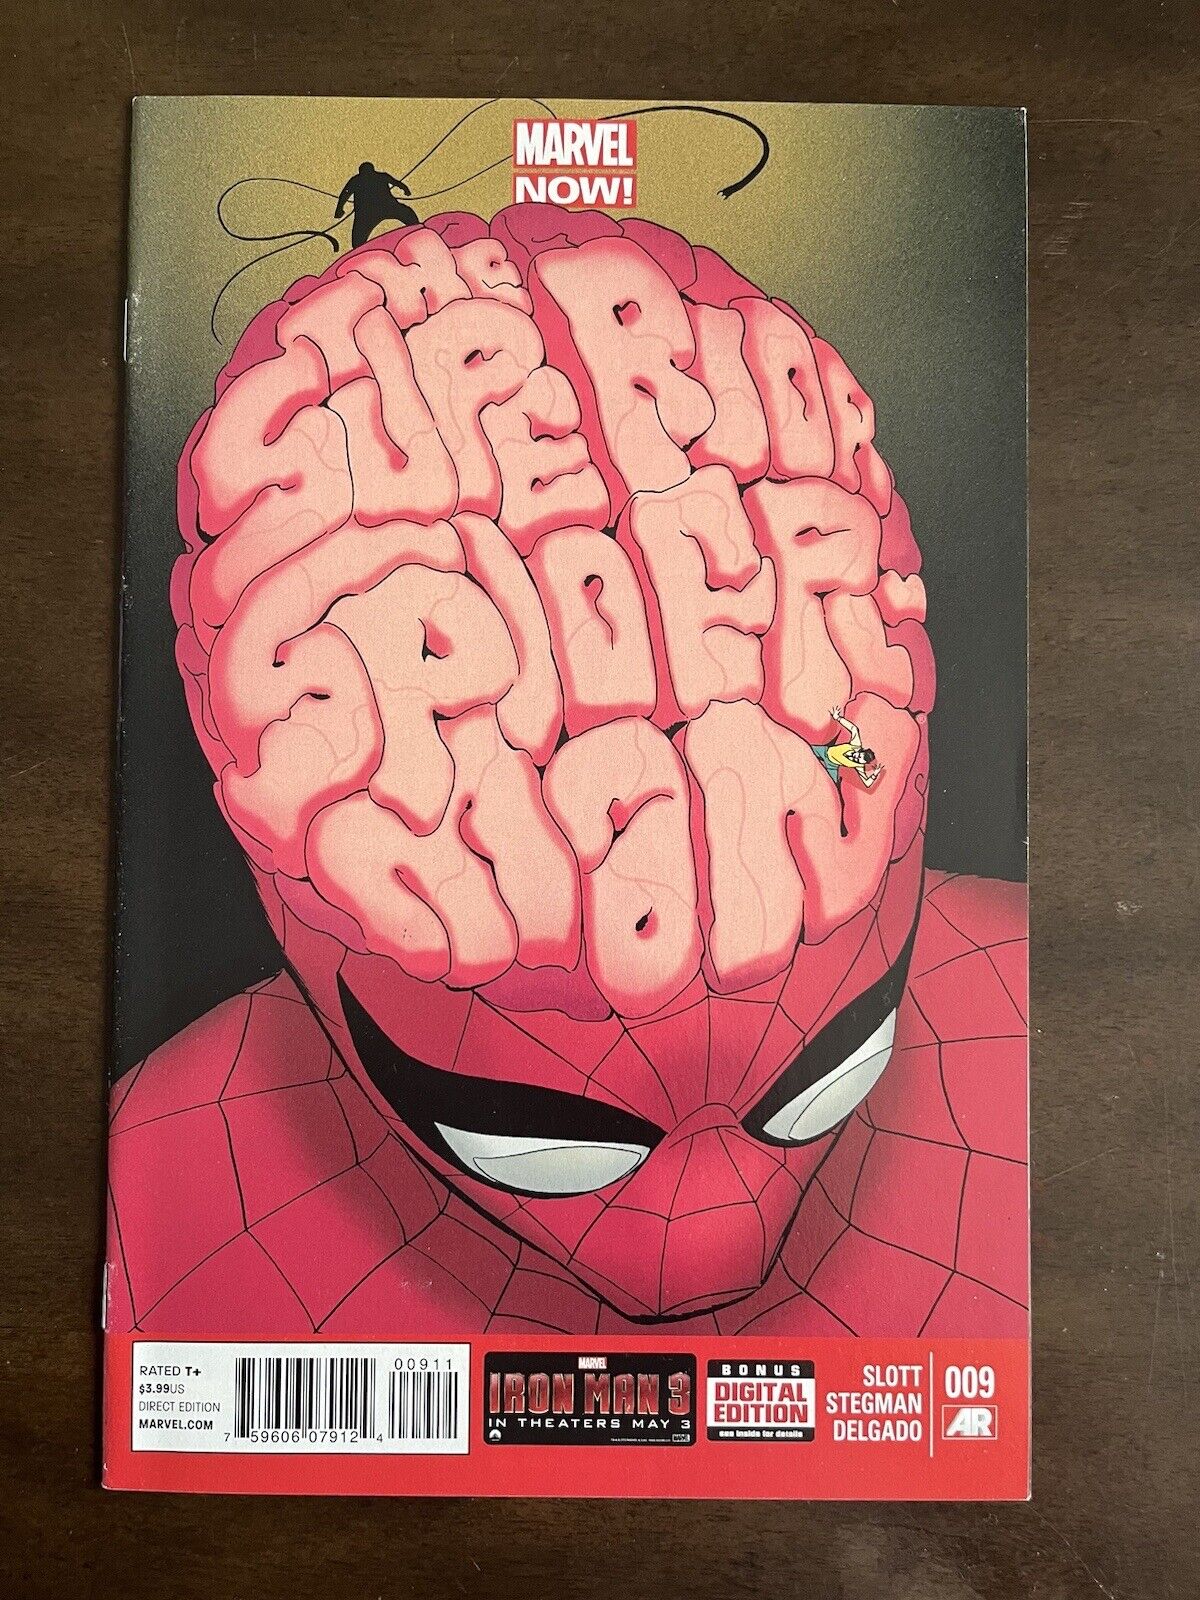 Superior Spider-Man #9, vol 1 - (2013) - Marvel Comics - VF/NM